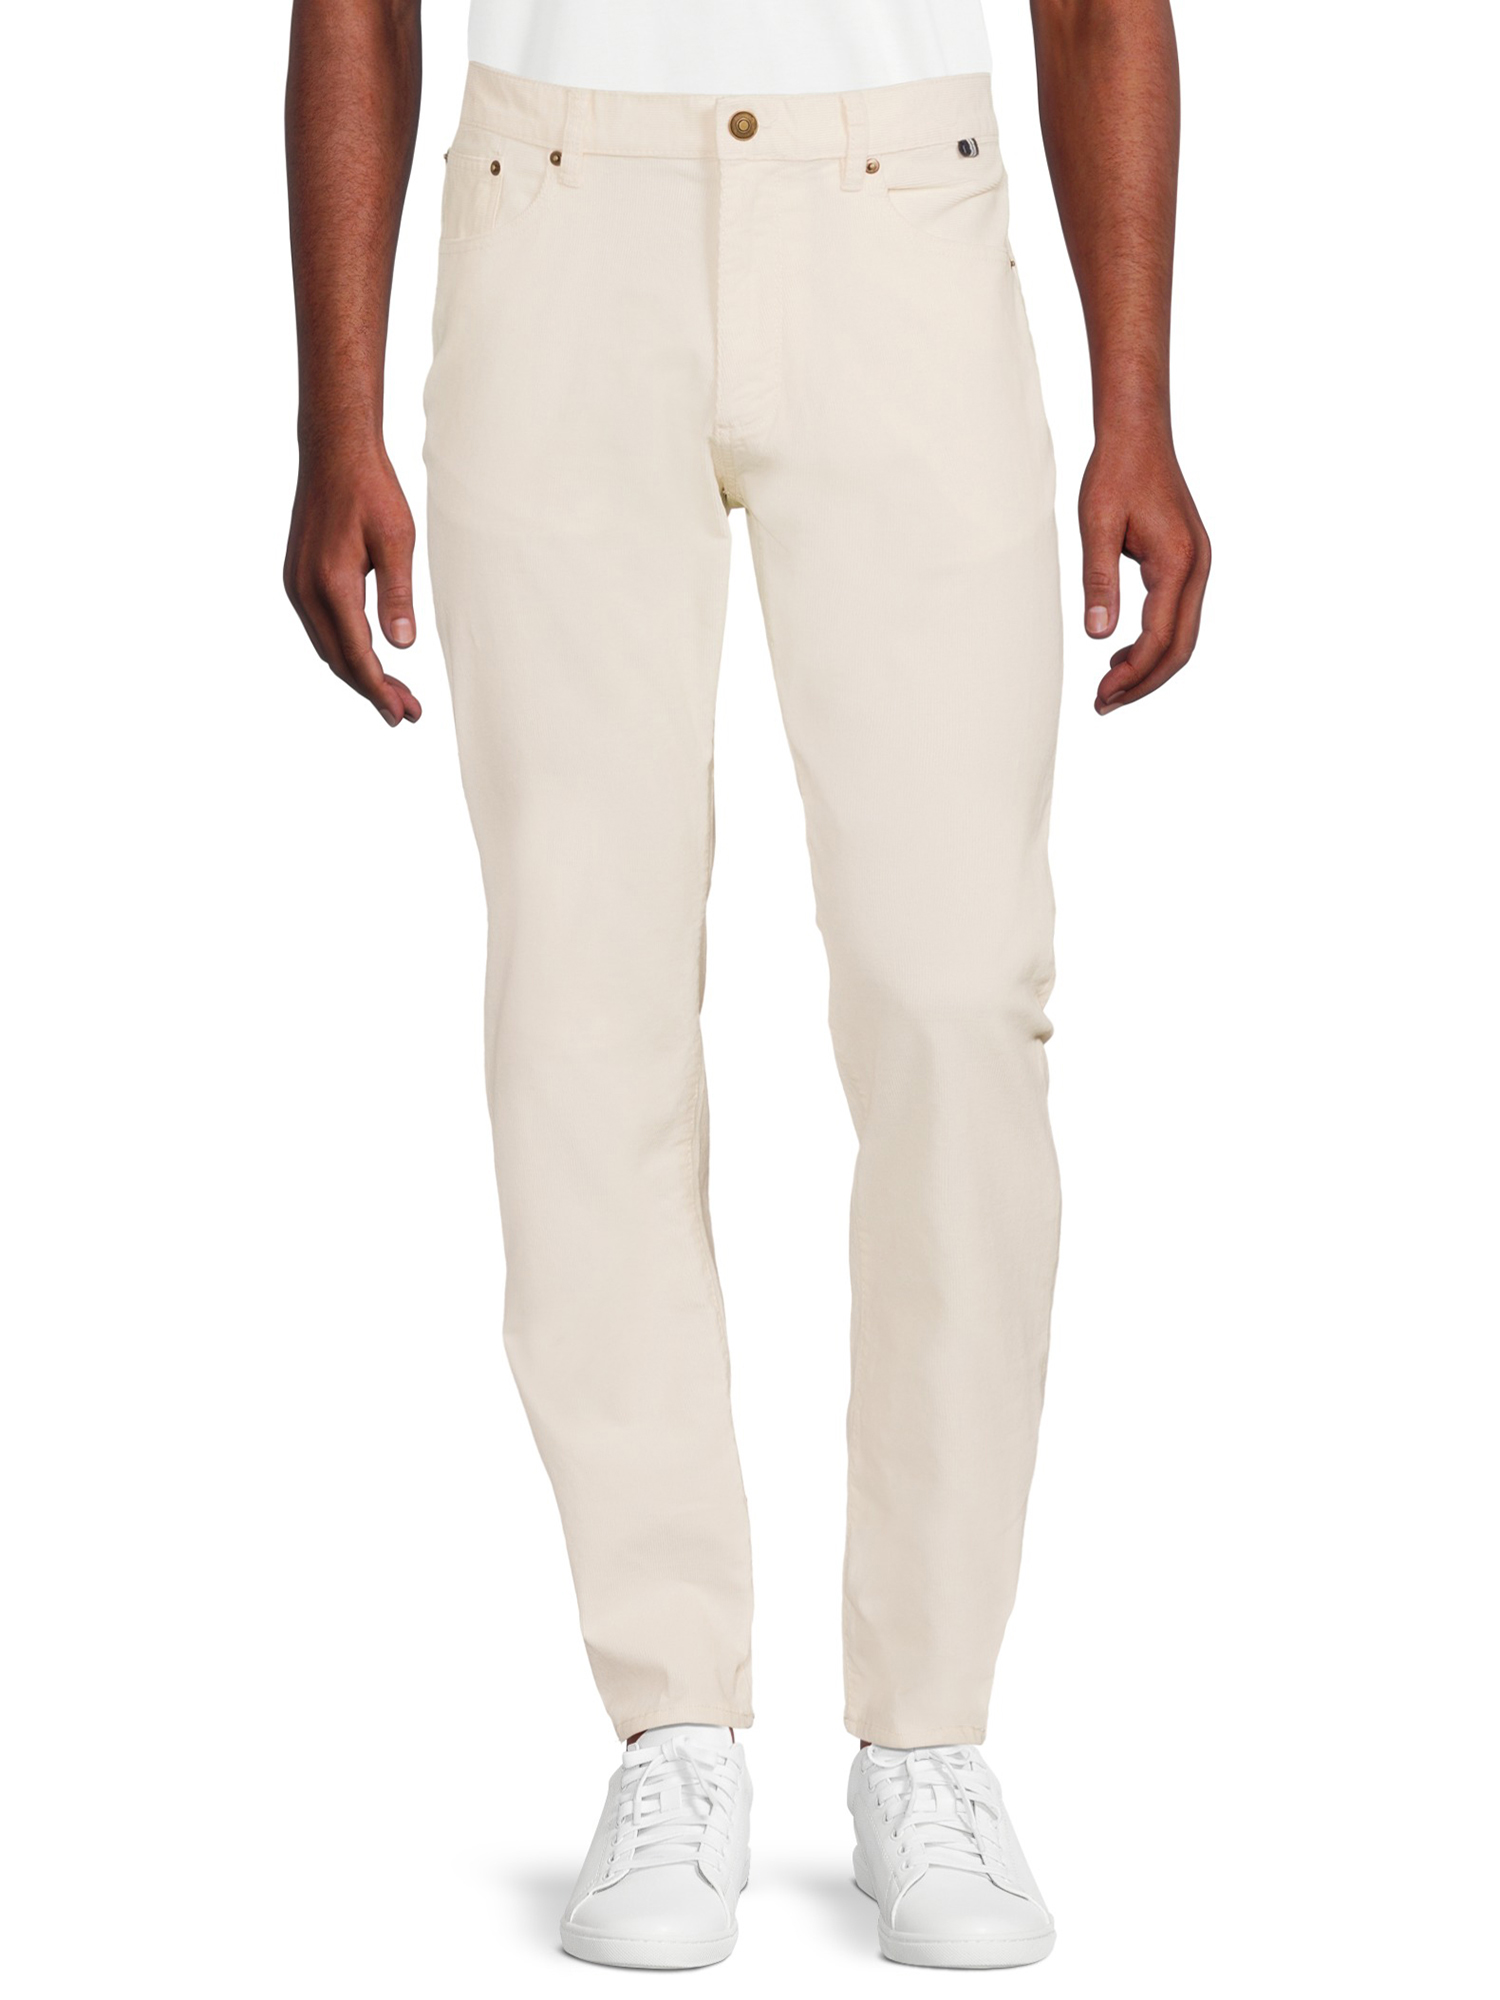 Tony Hawk Men's Stretch Corduroy Pants with 5 Pockets - Walmart.com